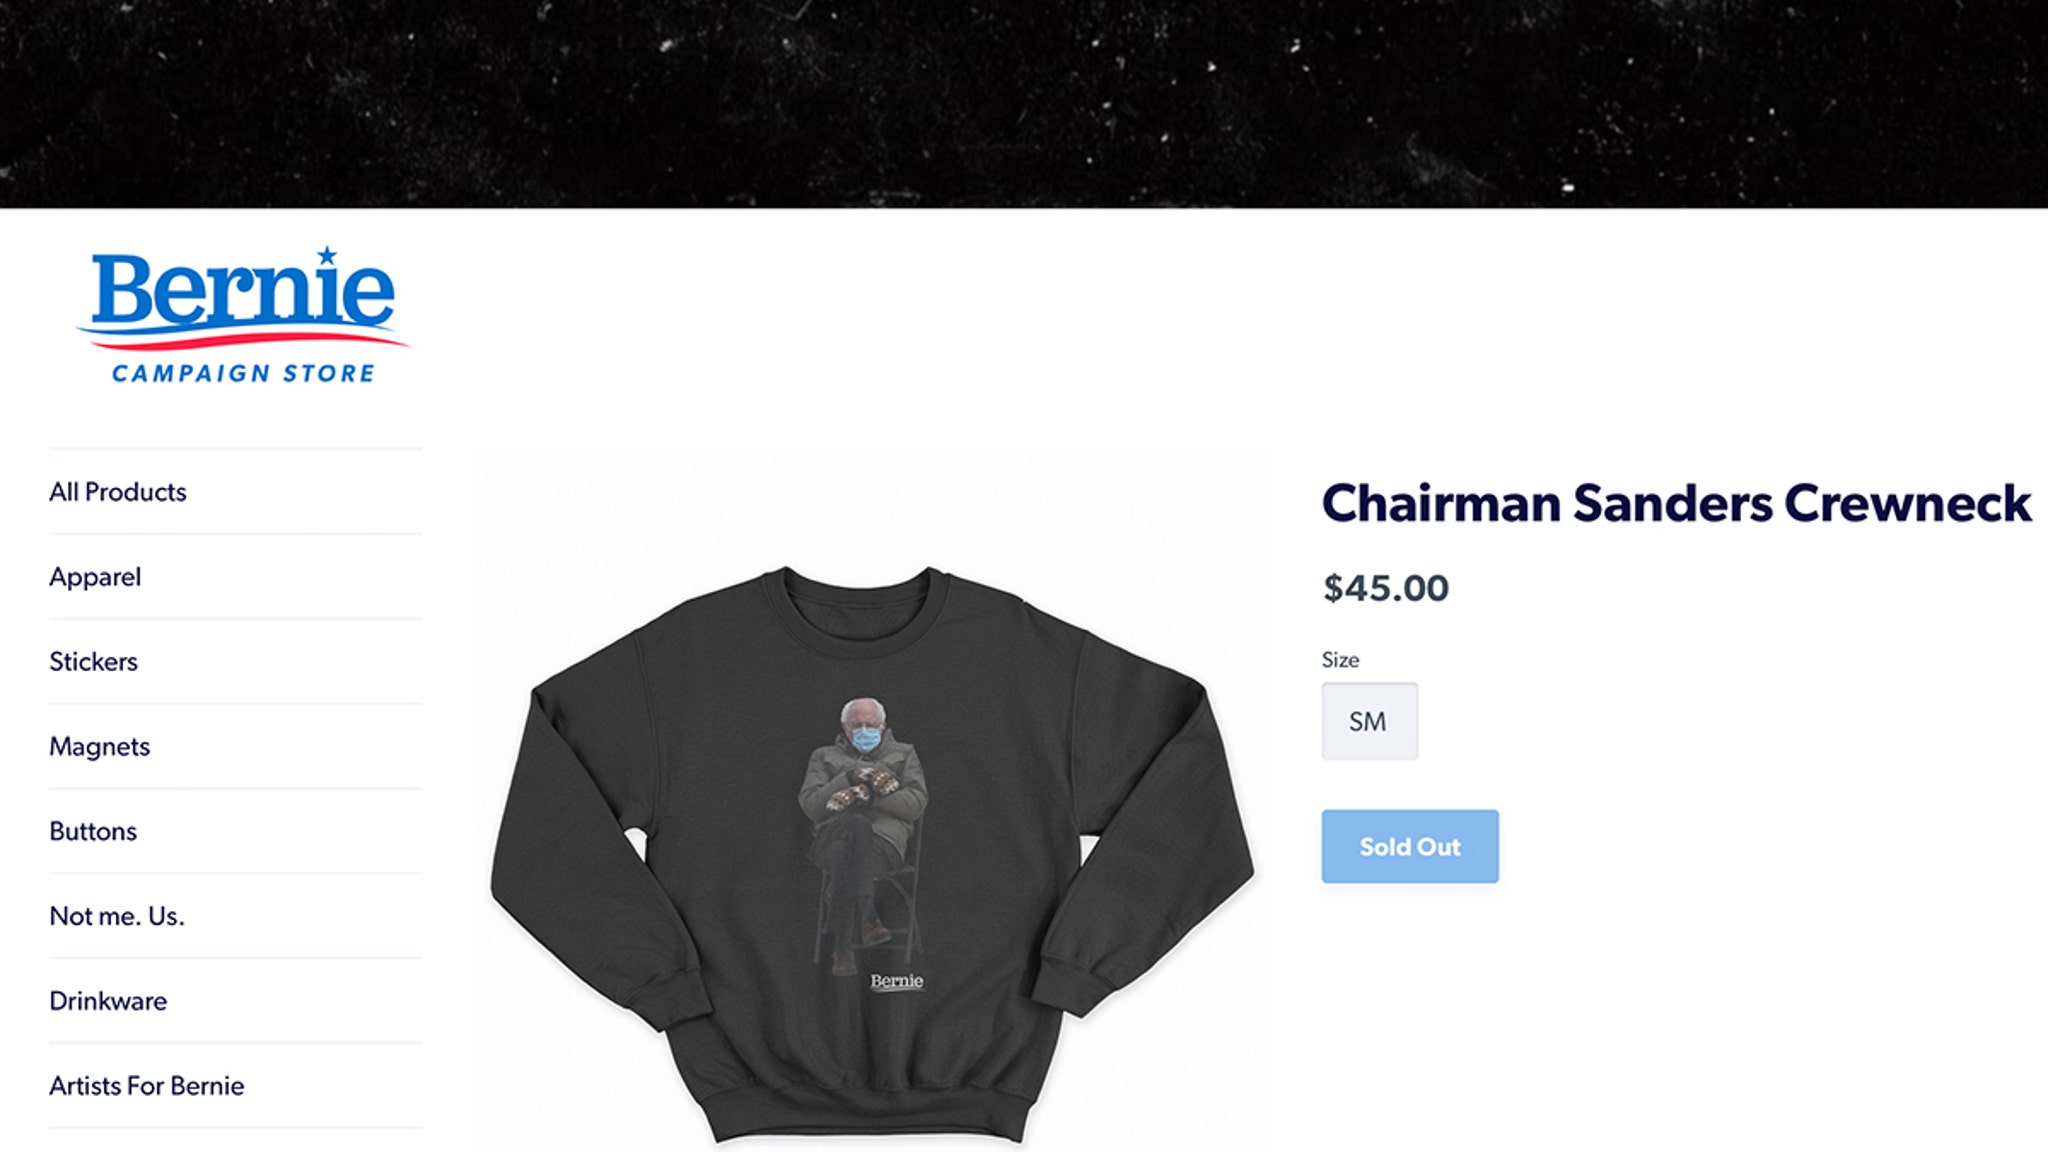 Bernie Sanders Inauguration Meme Sweatshirts Sell Out Fast photo